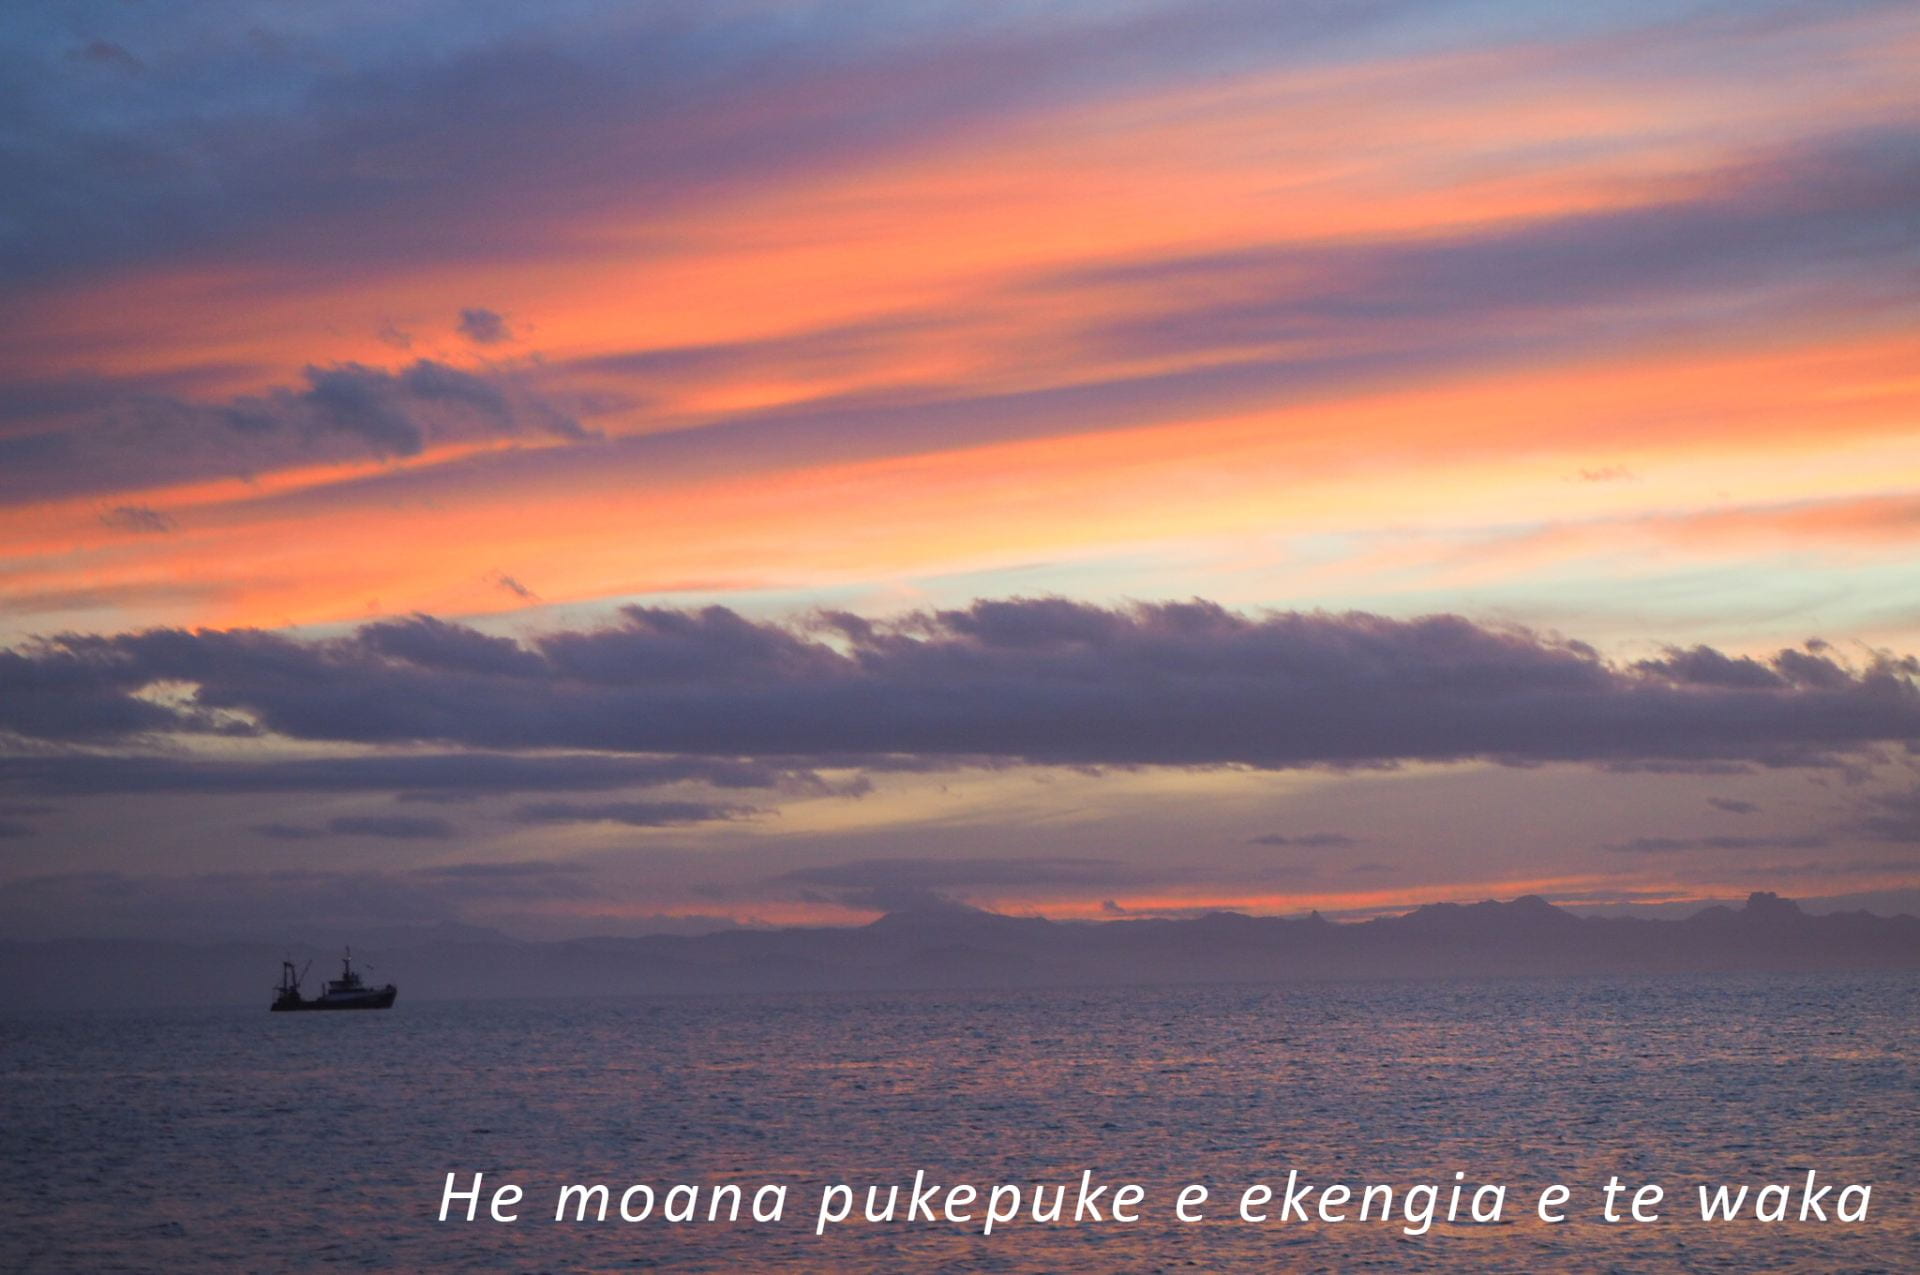 A fishing vessel at sunset off the coast of the Coromandel with the words 'He moana pukepuke e ekengia e te waka'